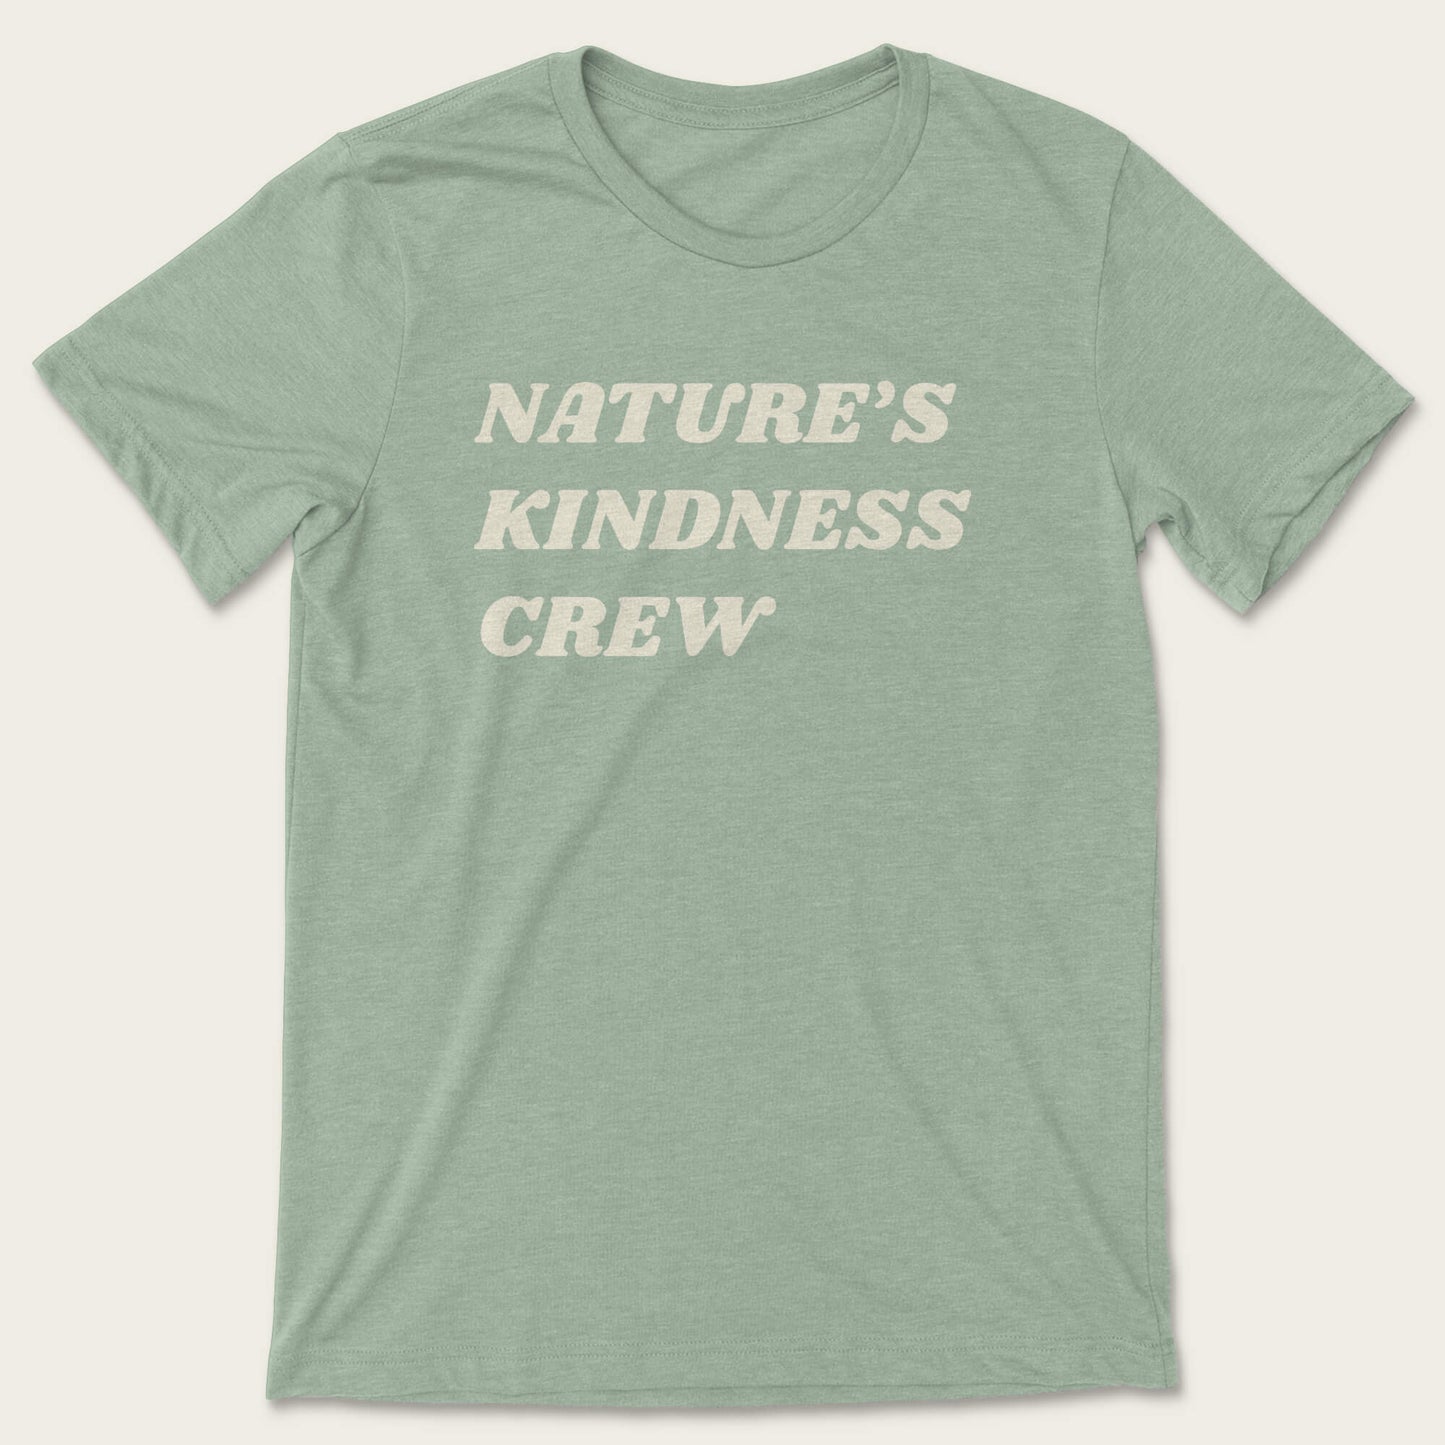 Nature's Kindness Crew Tee - Heather Sage